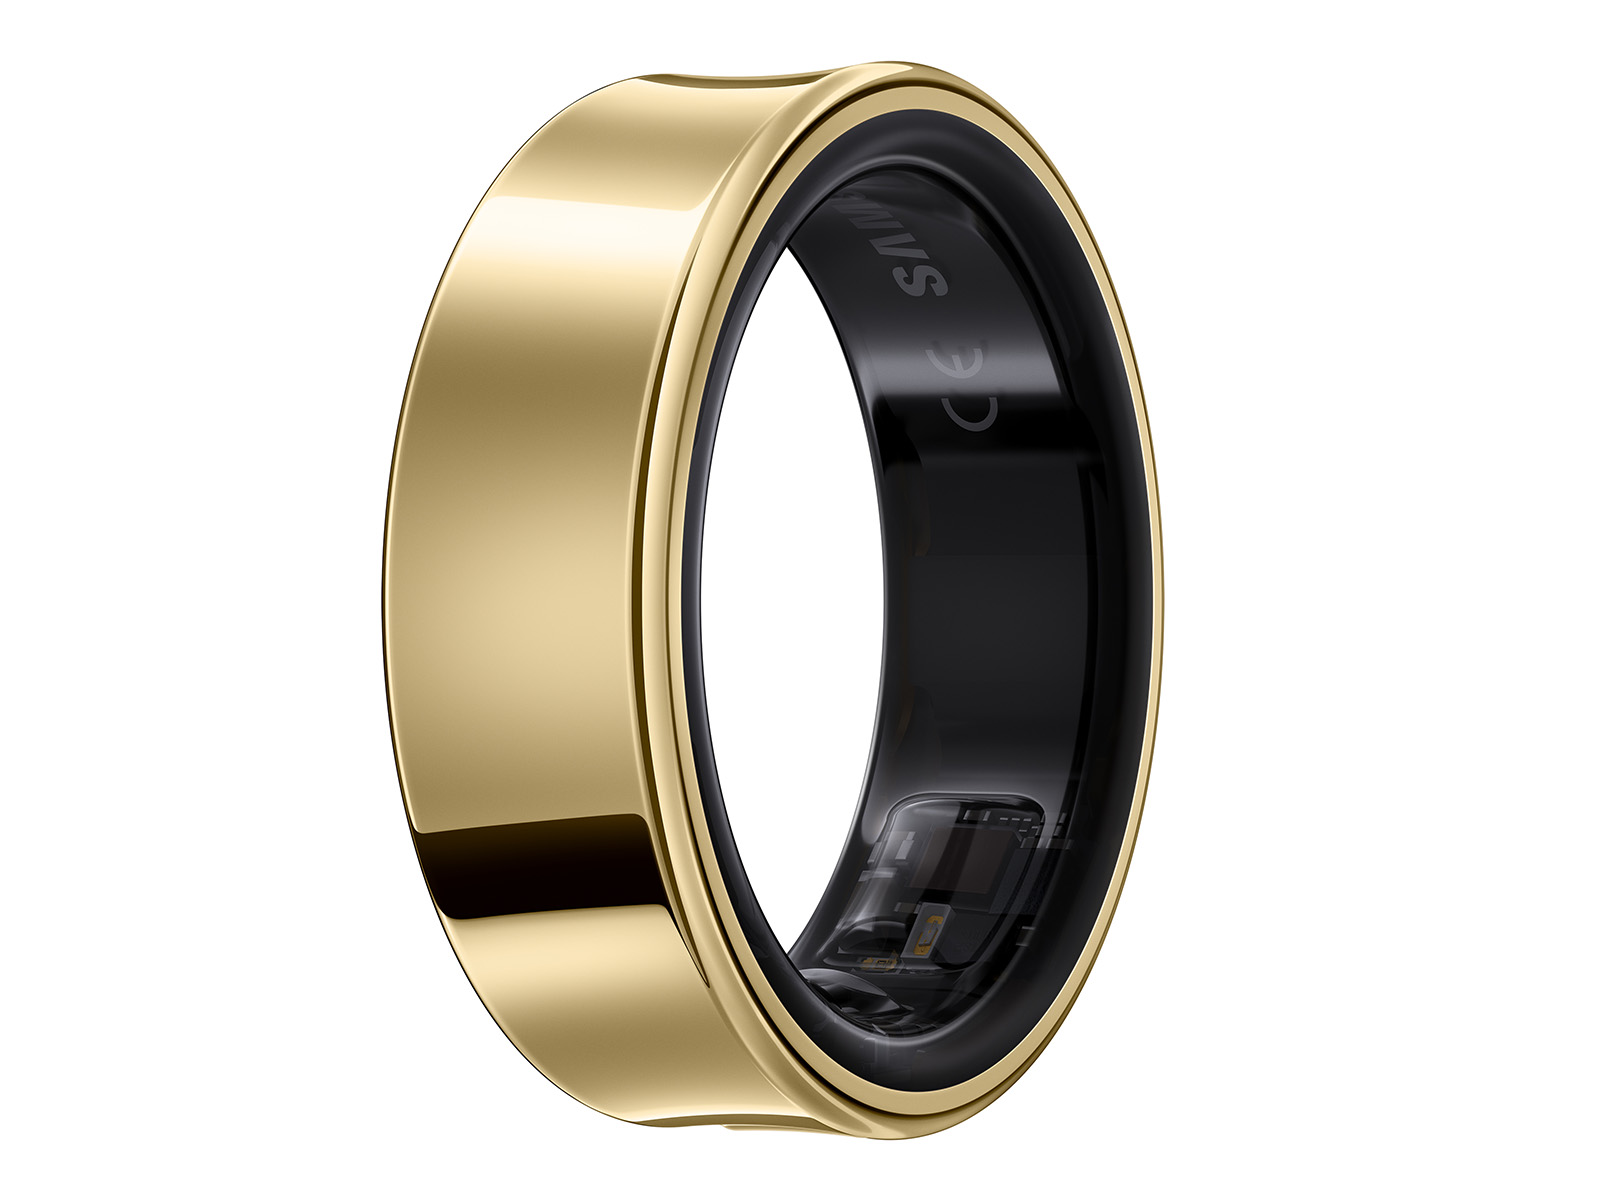 Thumbnail image of Galaxy Ring, Size 5, Titanium Gold